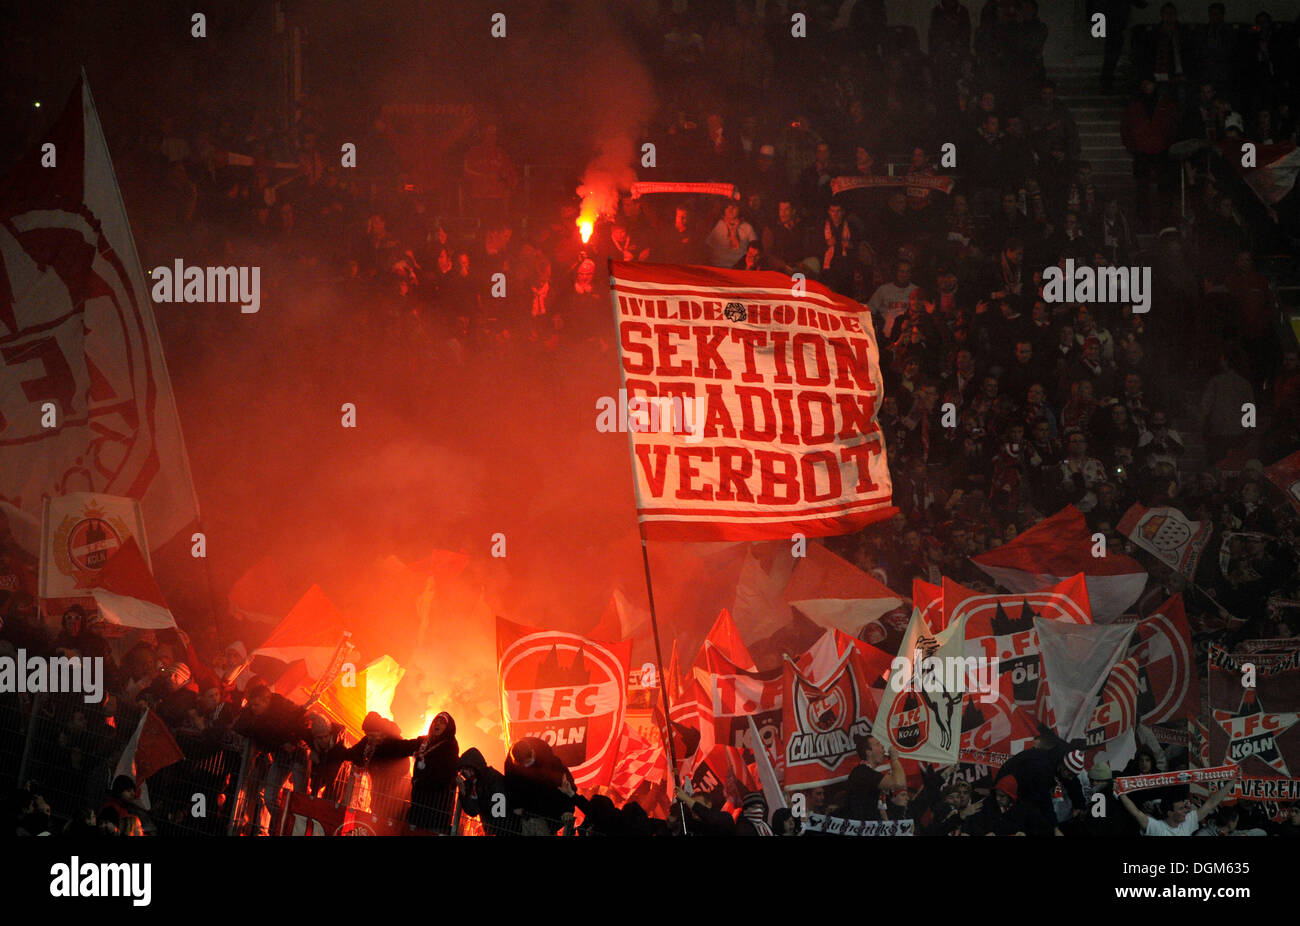 'Stadionverbot' written on banner, German for stadium ban, flares, pyrotechnics, bengal fireworks, Mercedes-Benz Arena Stock Photo